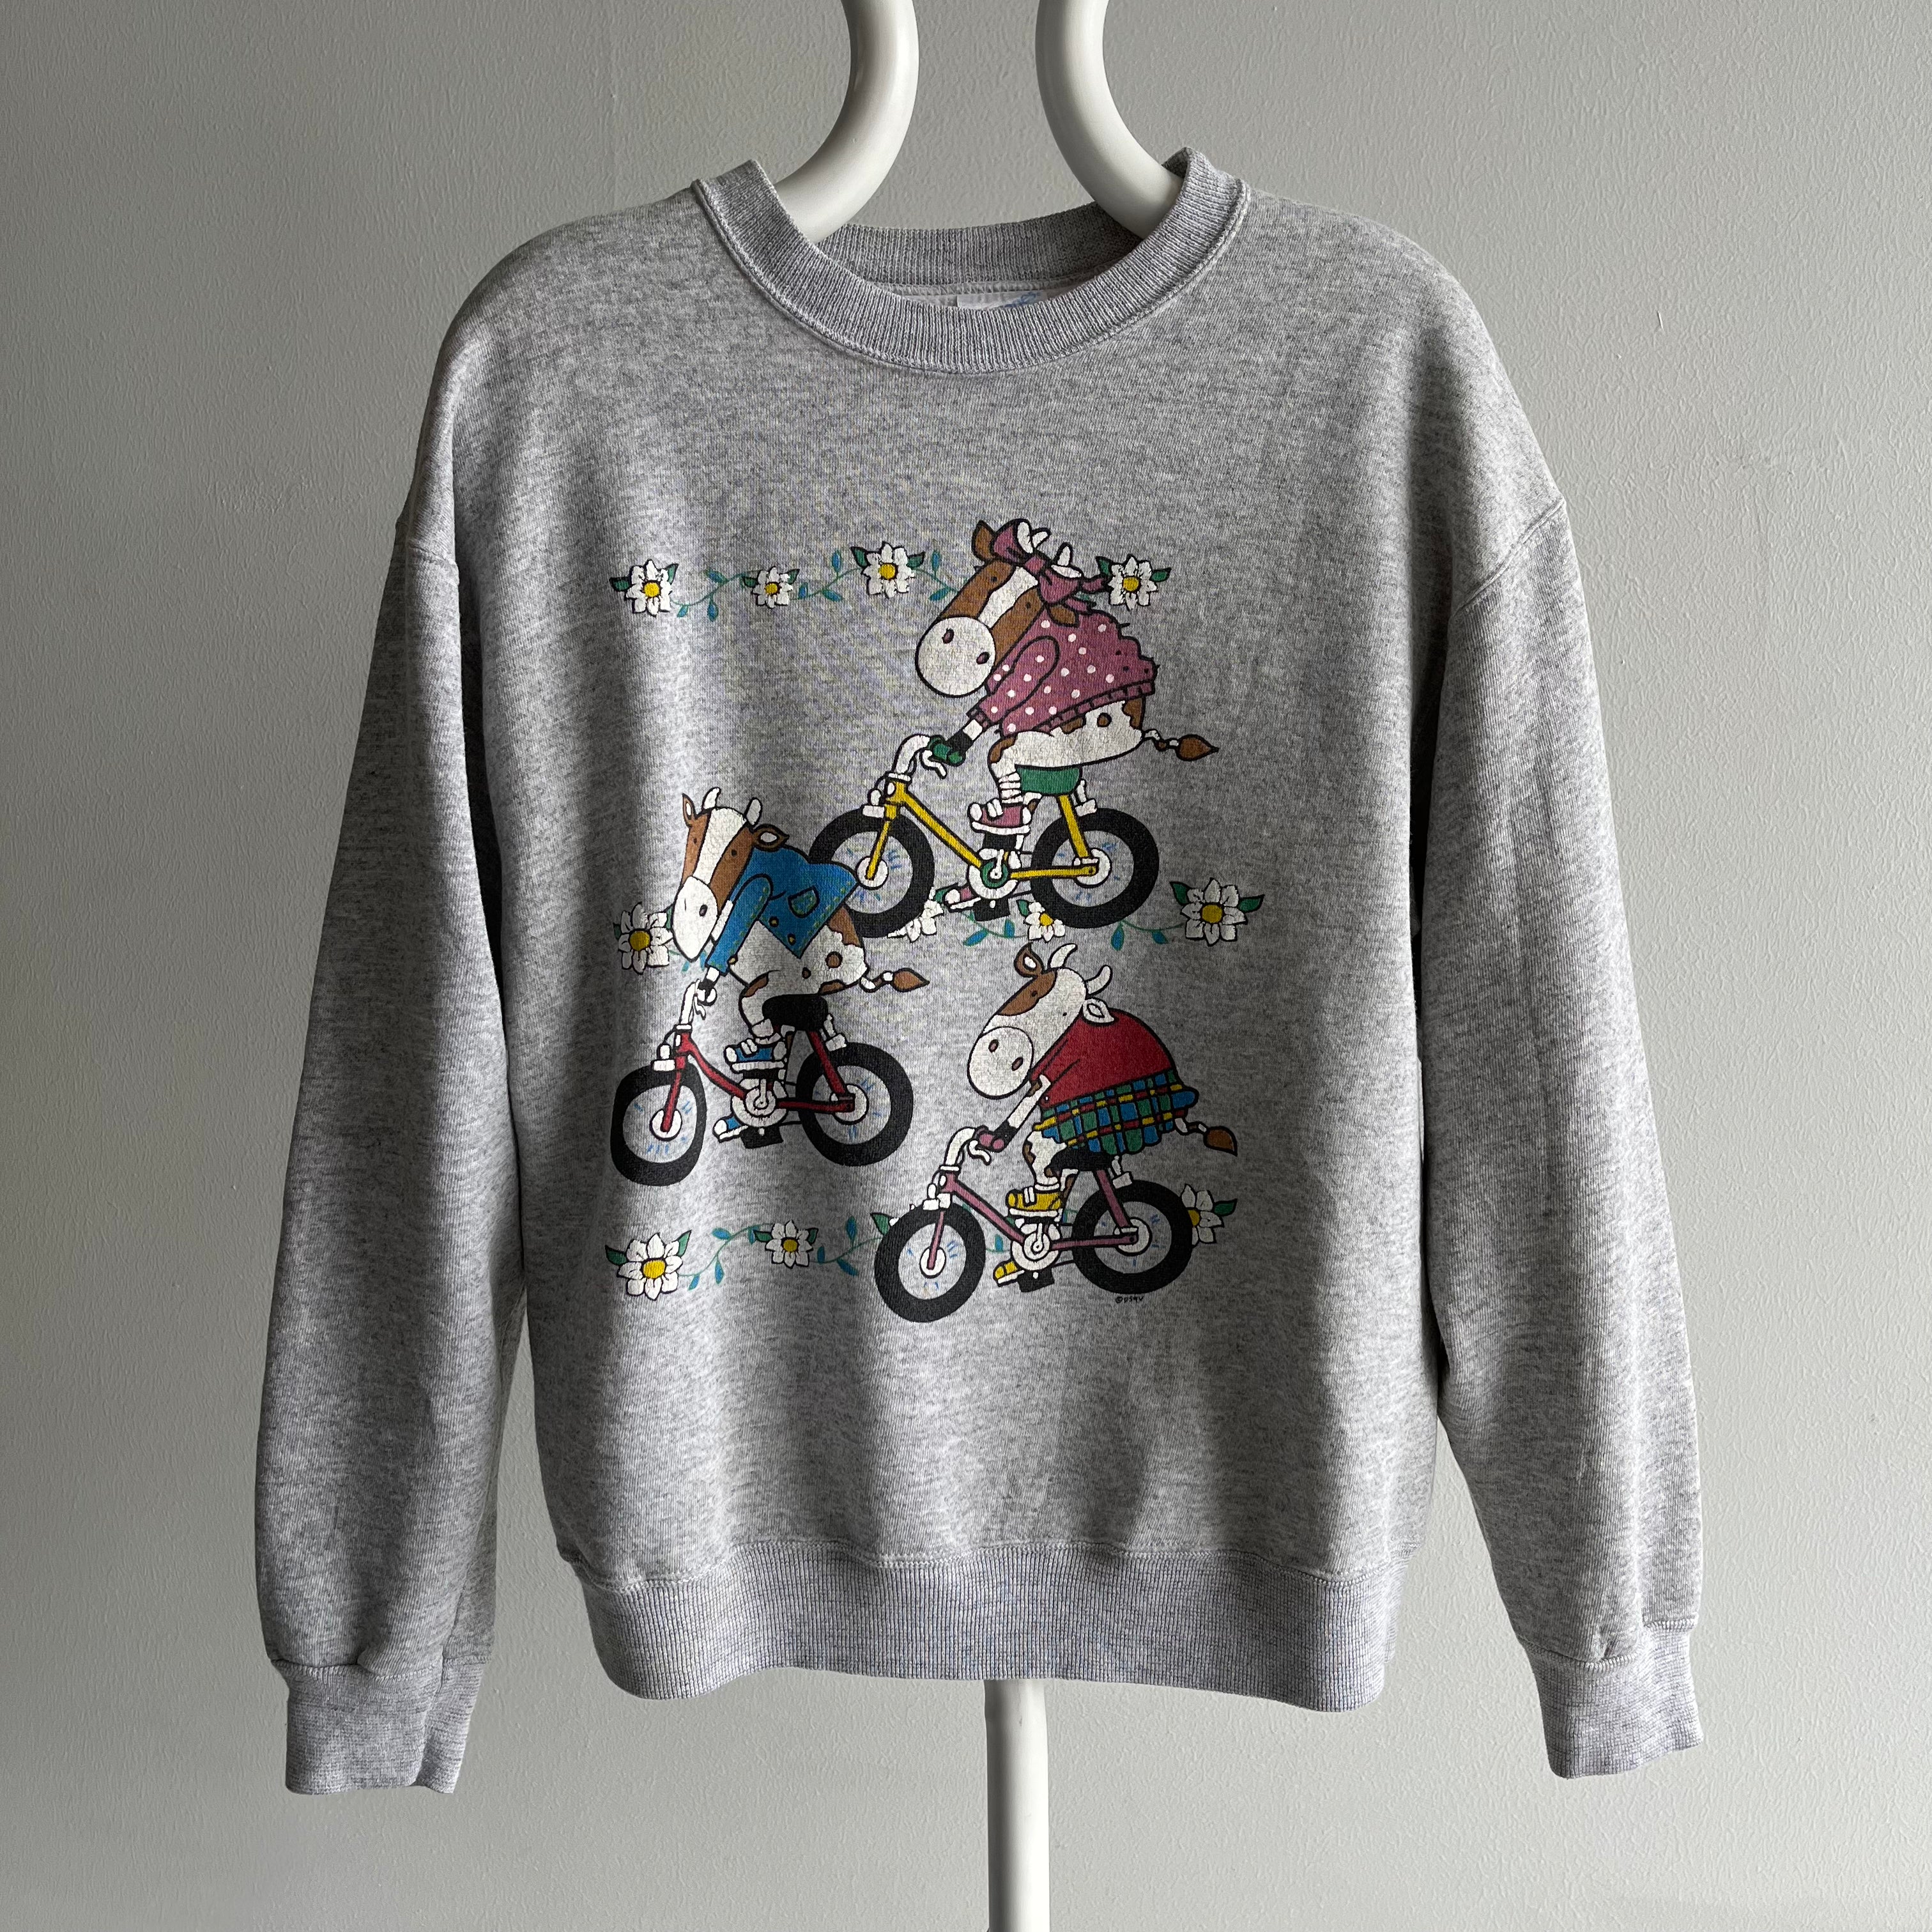 1994 Hipster Cows on Bikes Sweatshirt